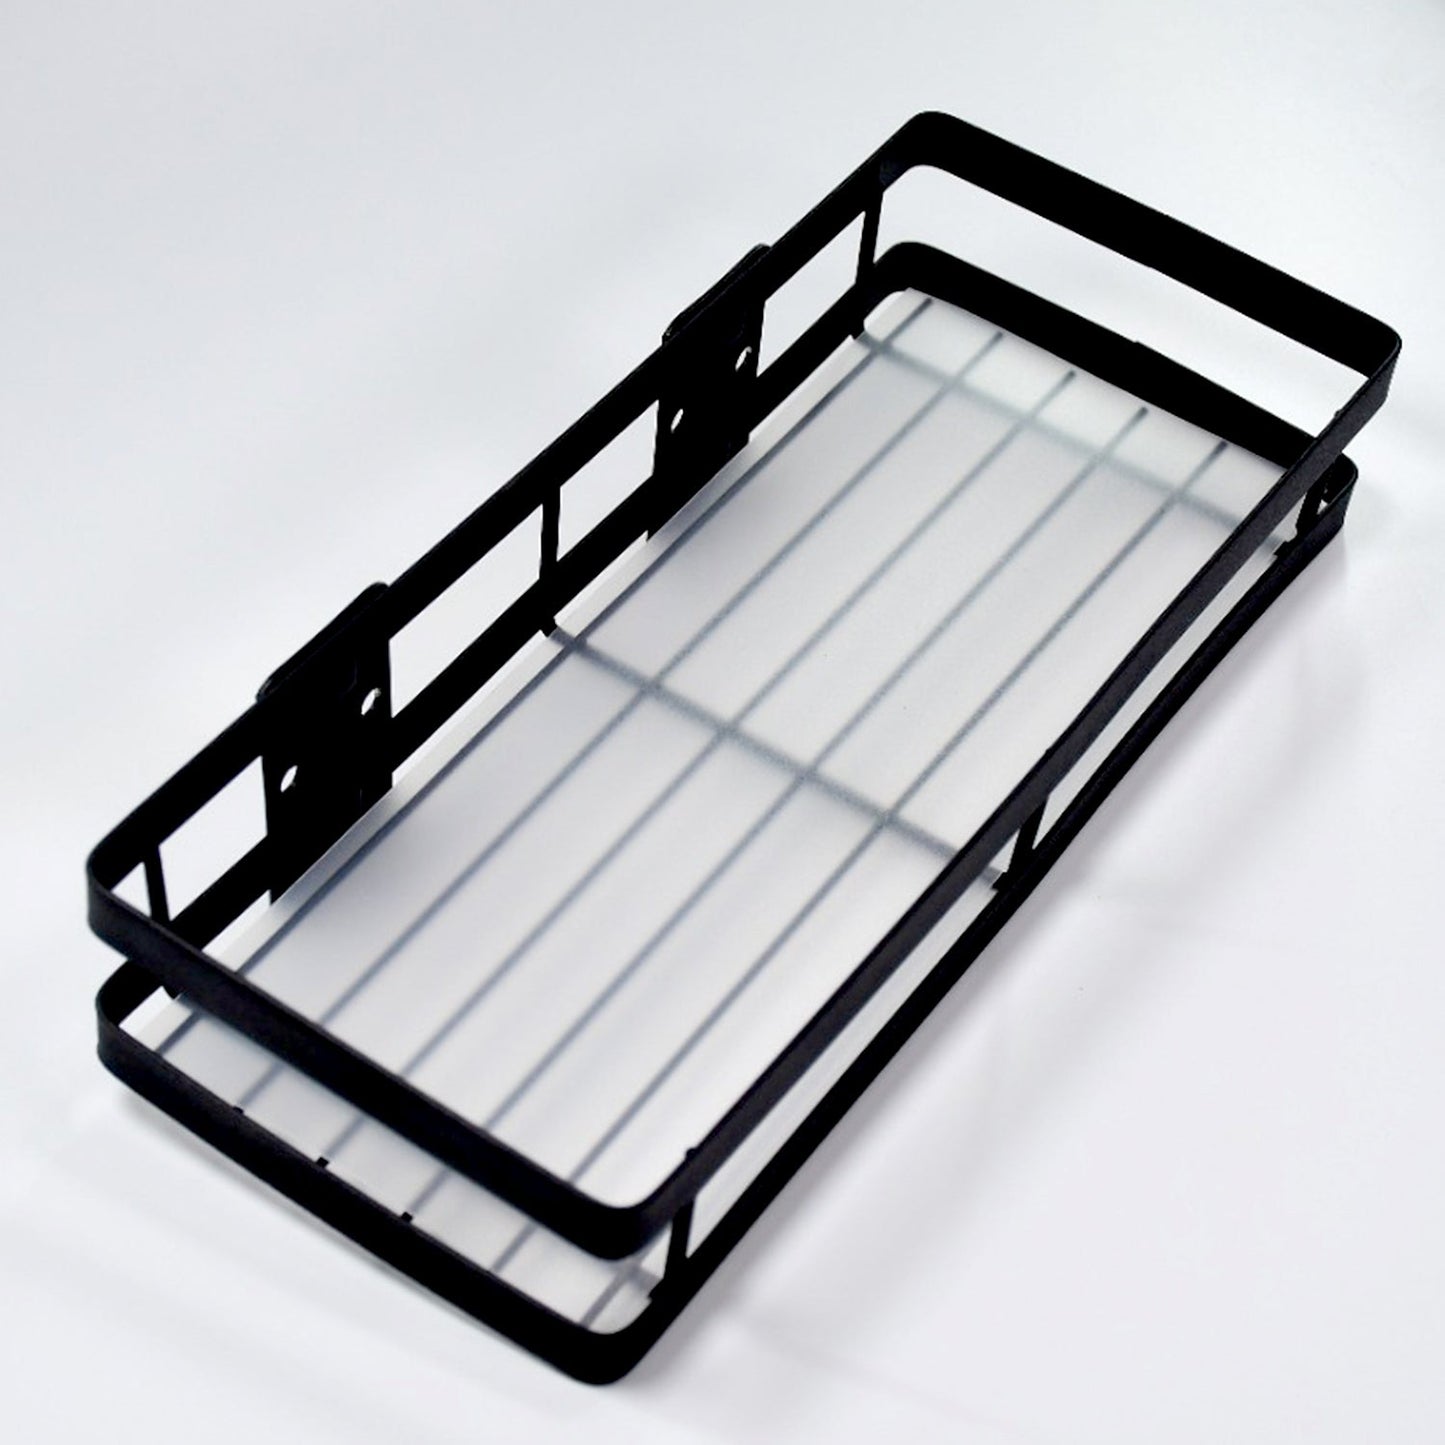 4923 30cm Metal Space Saving Multi-Purpose rack for Kitchen Storage Organizer Shelf Stand. DeoDap